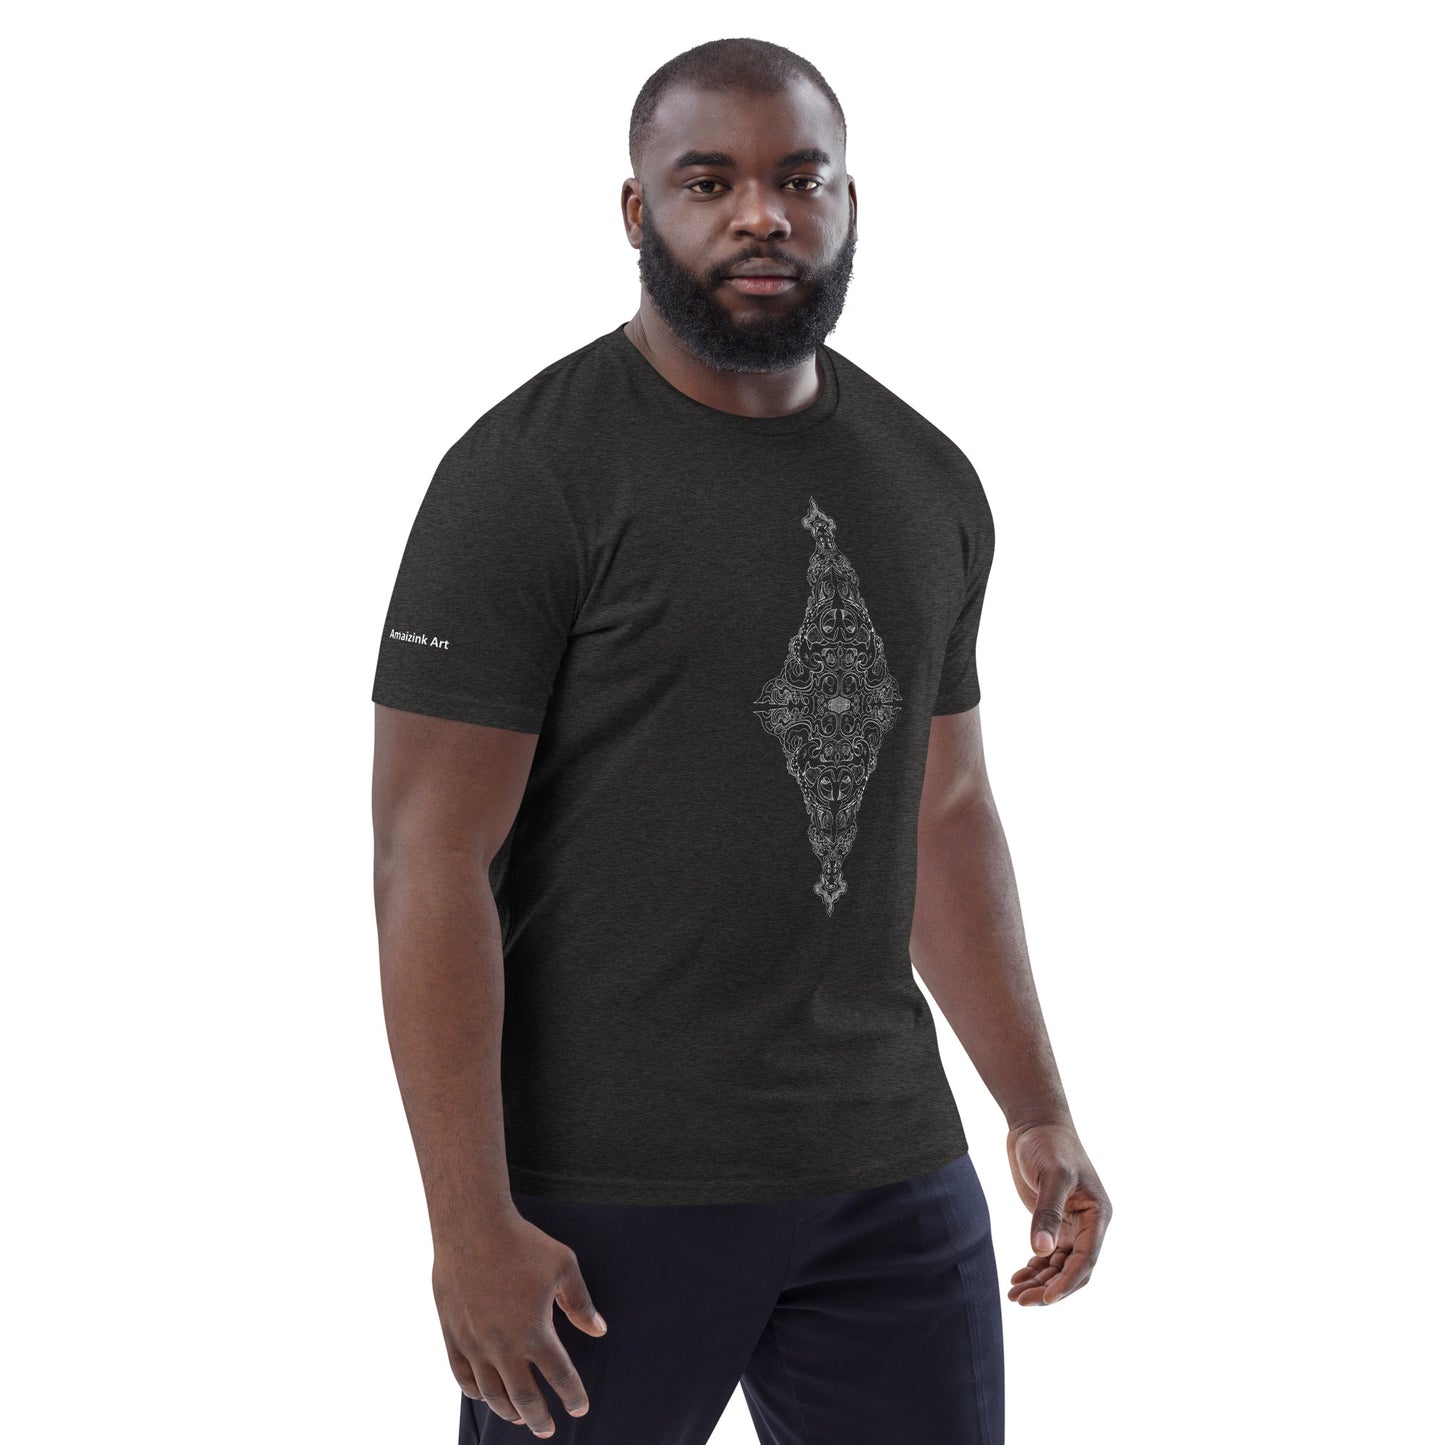 New World Seal organic cotton t-shirt